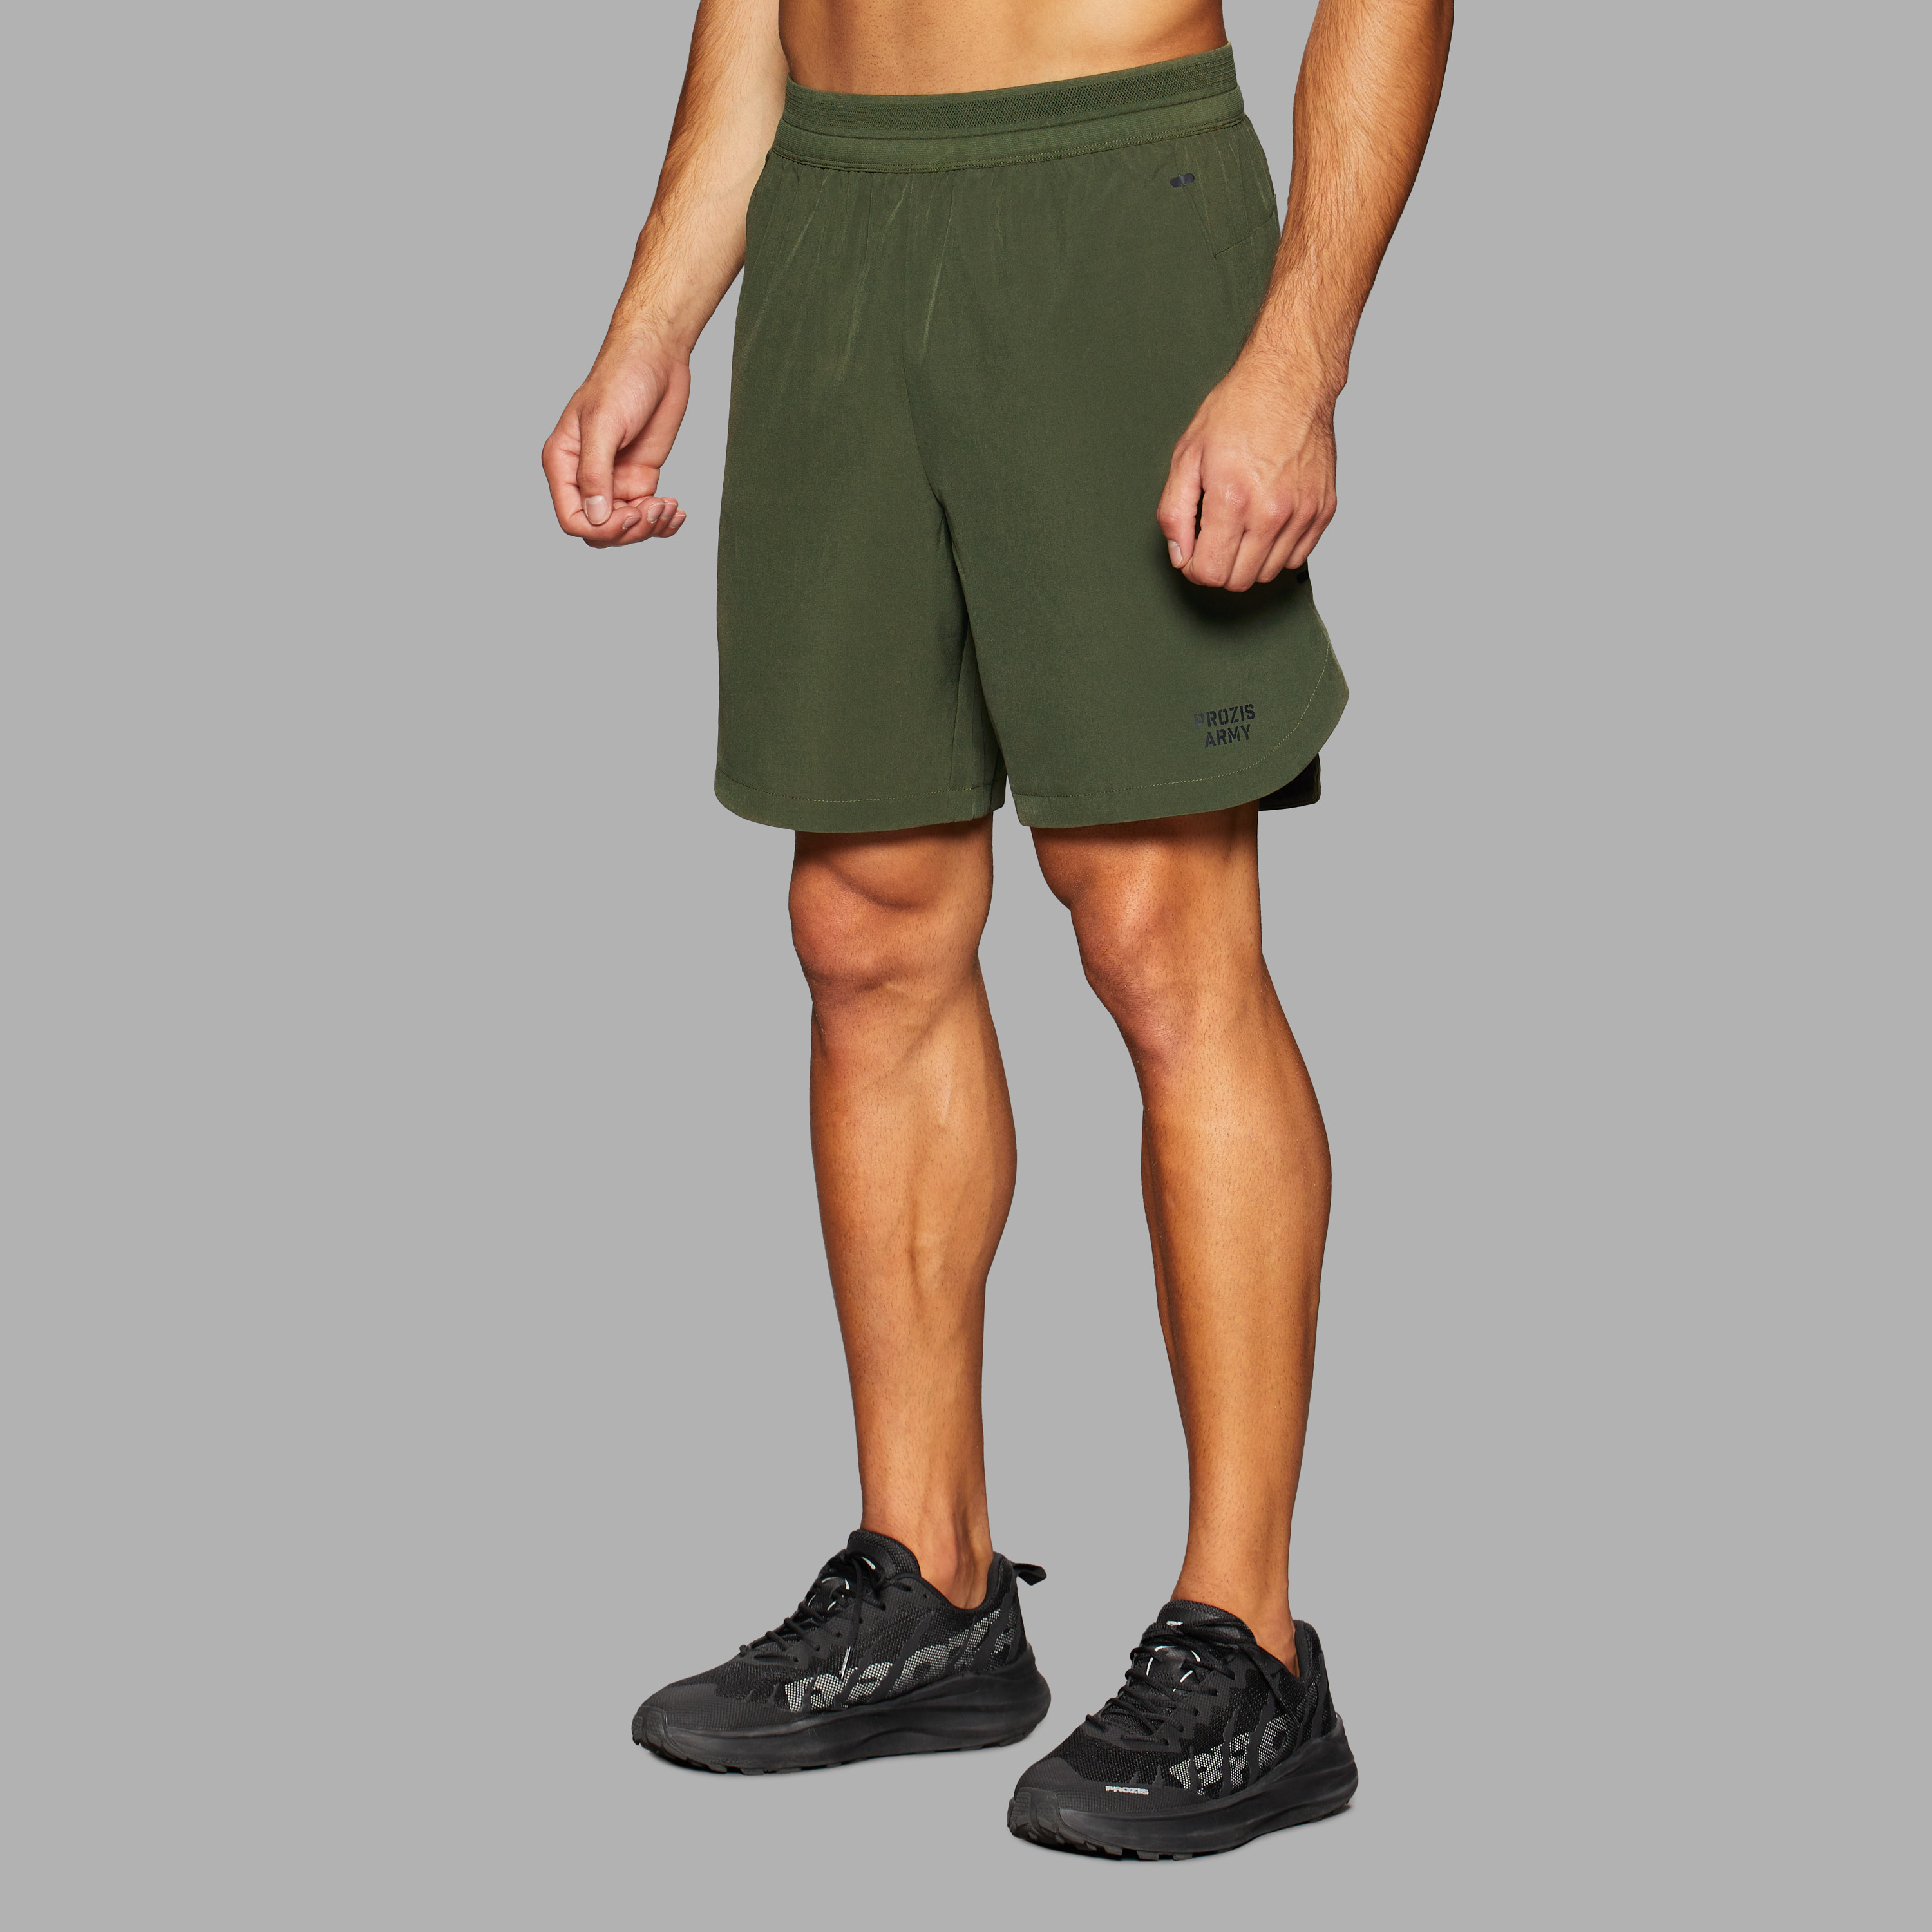 hipótesis antepasado Recuerdo Pantalones cortos de running Army - Mustang Olive Green - Gamas de Ropa |  Prozis